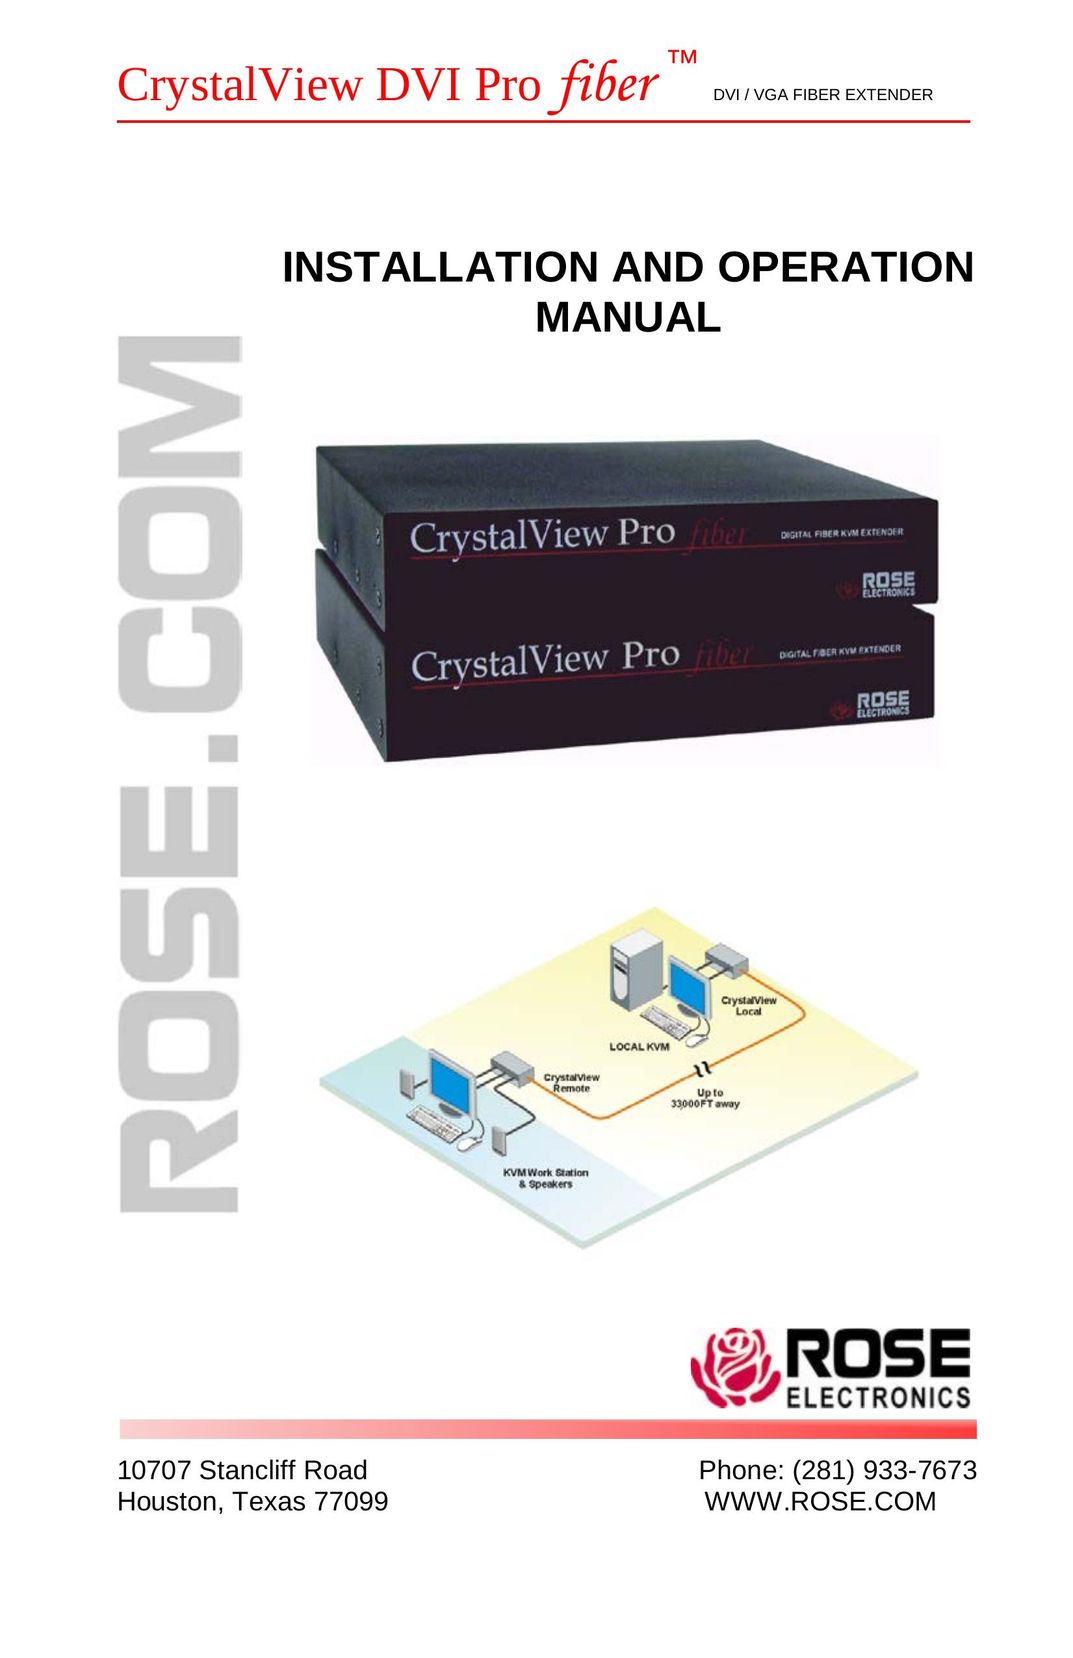 Rose electronic crystalview dvi pro fiber dvi/vga fiber extender Saw User Manual